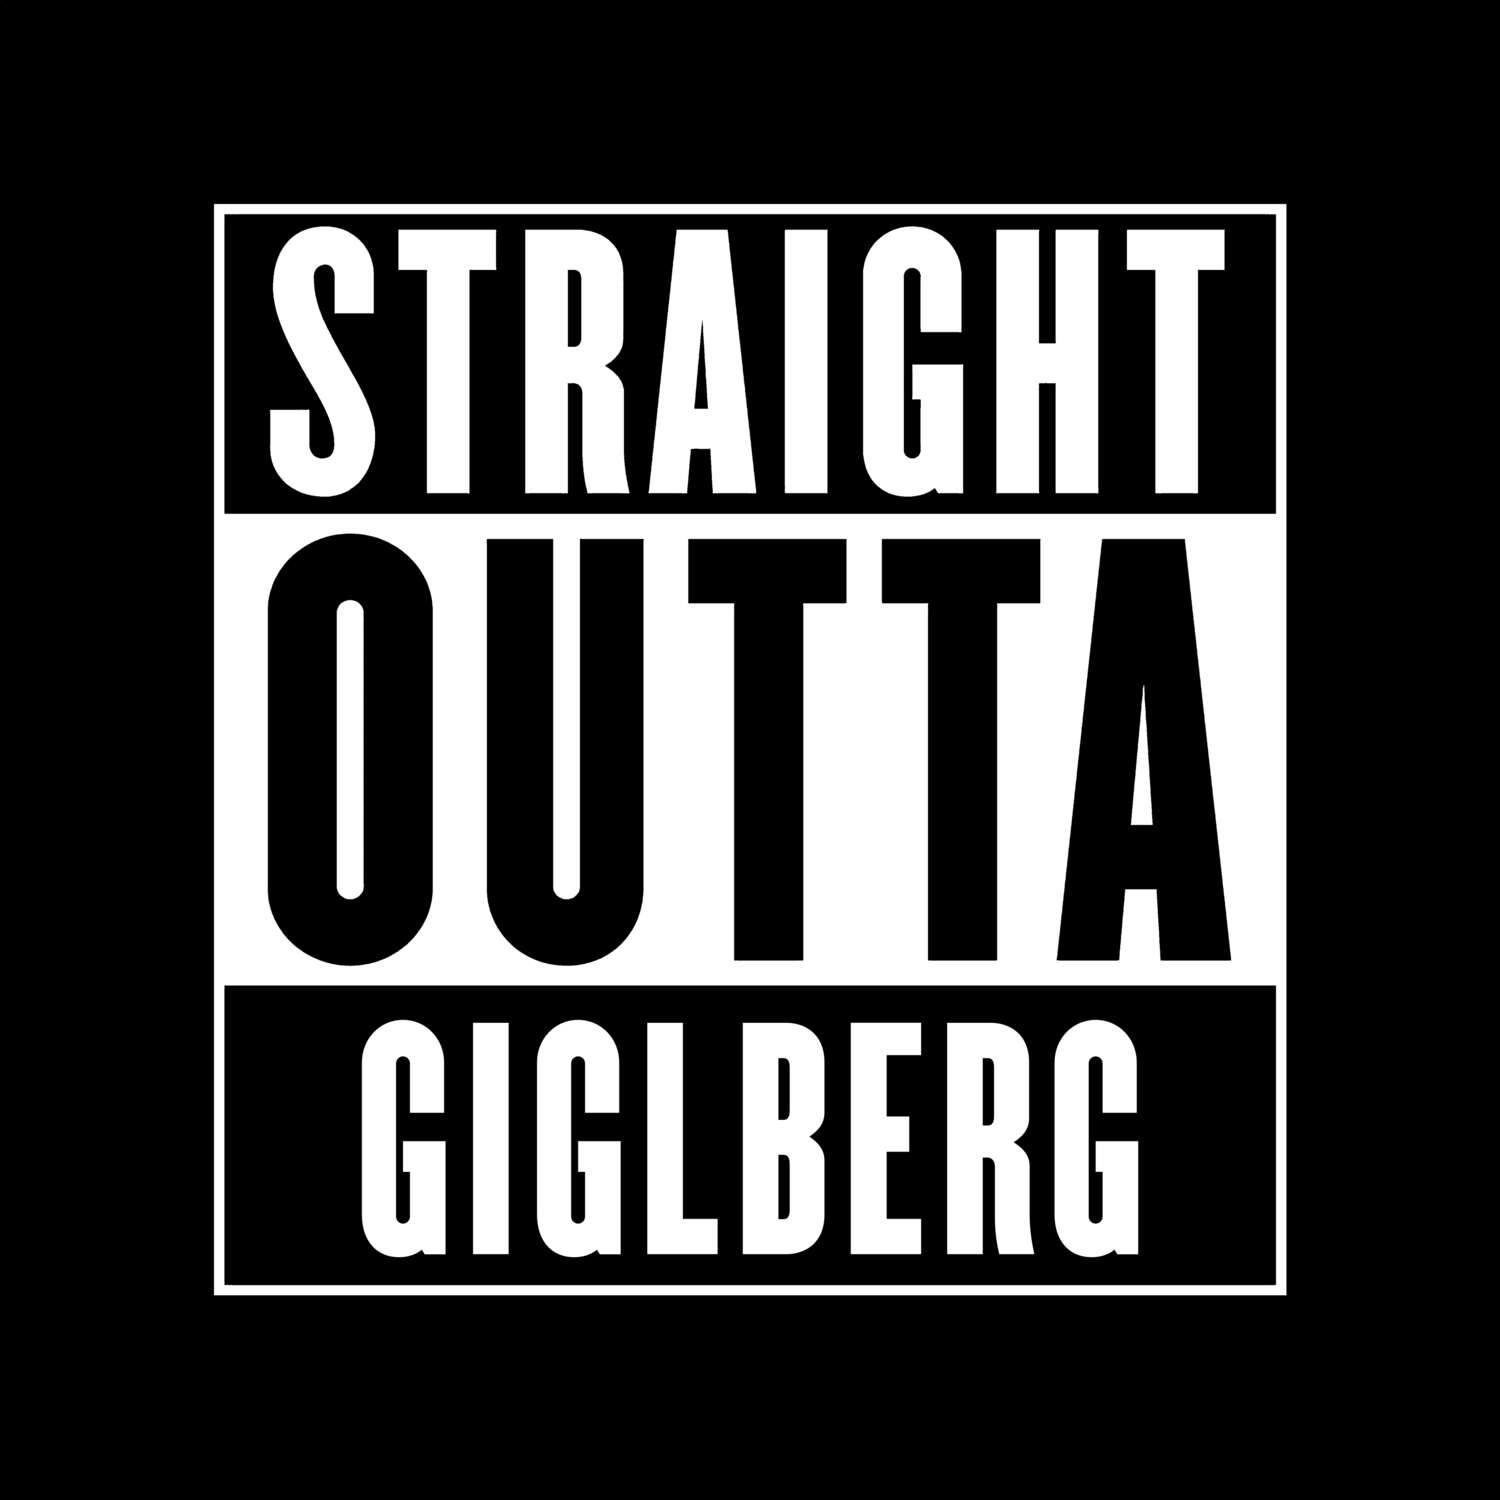 Giglberg T-Shirt »Straight Outta«